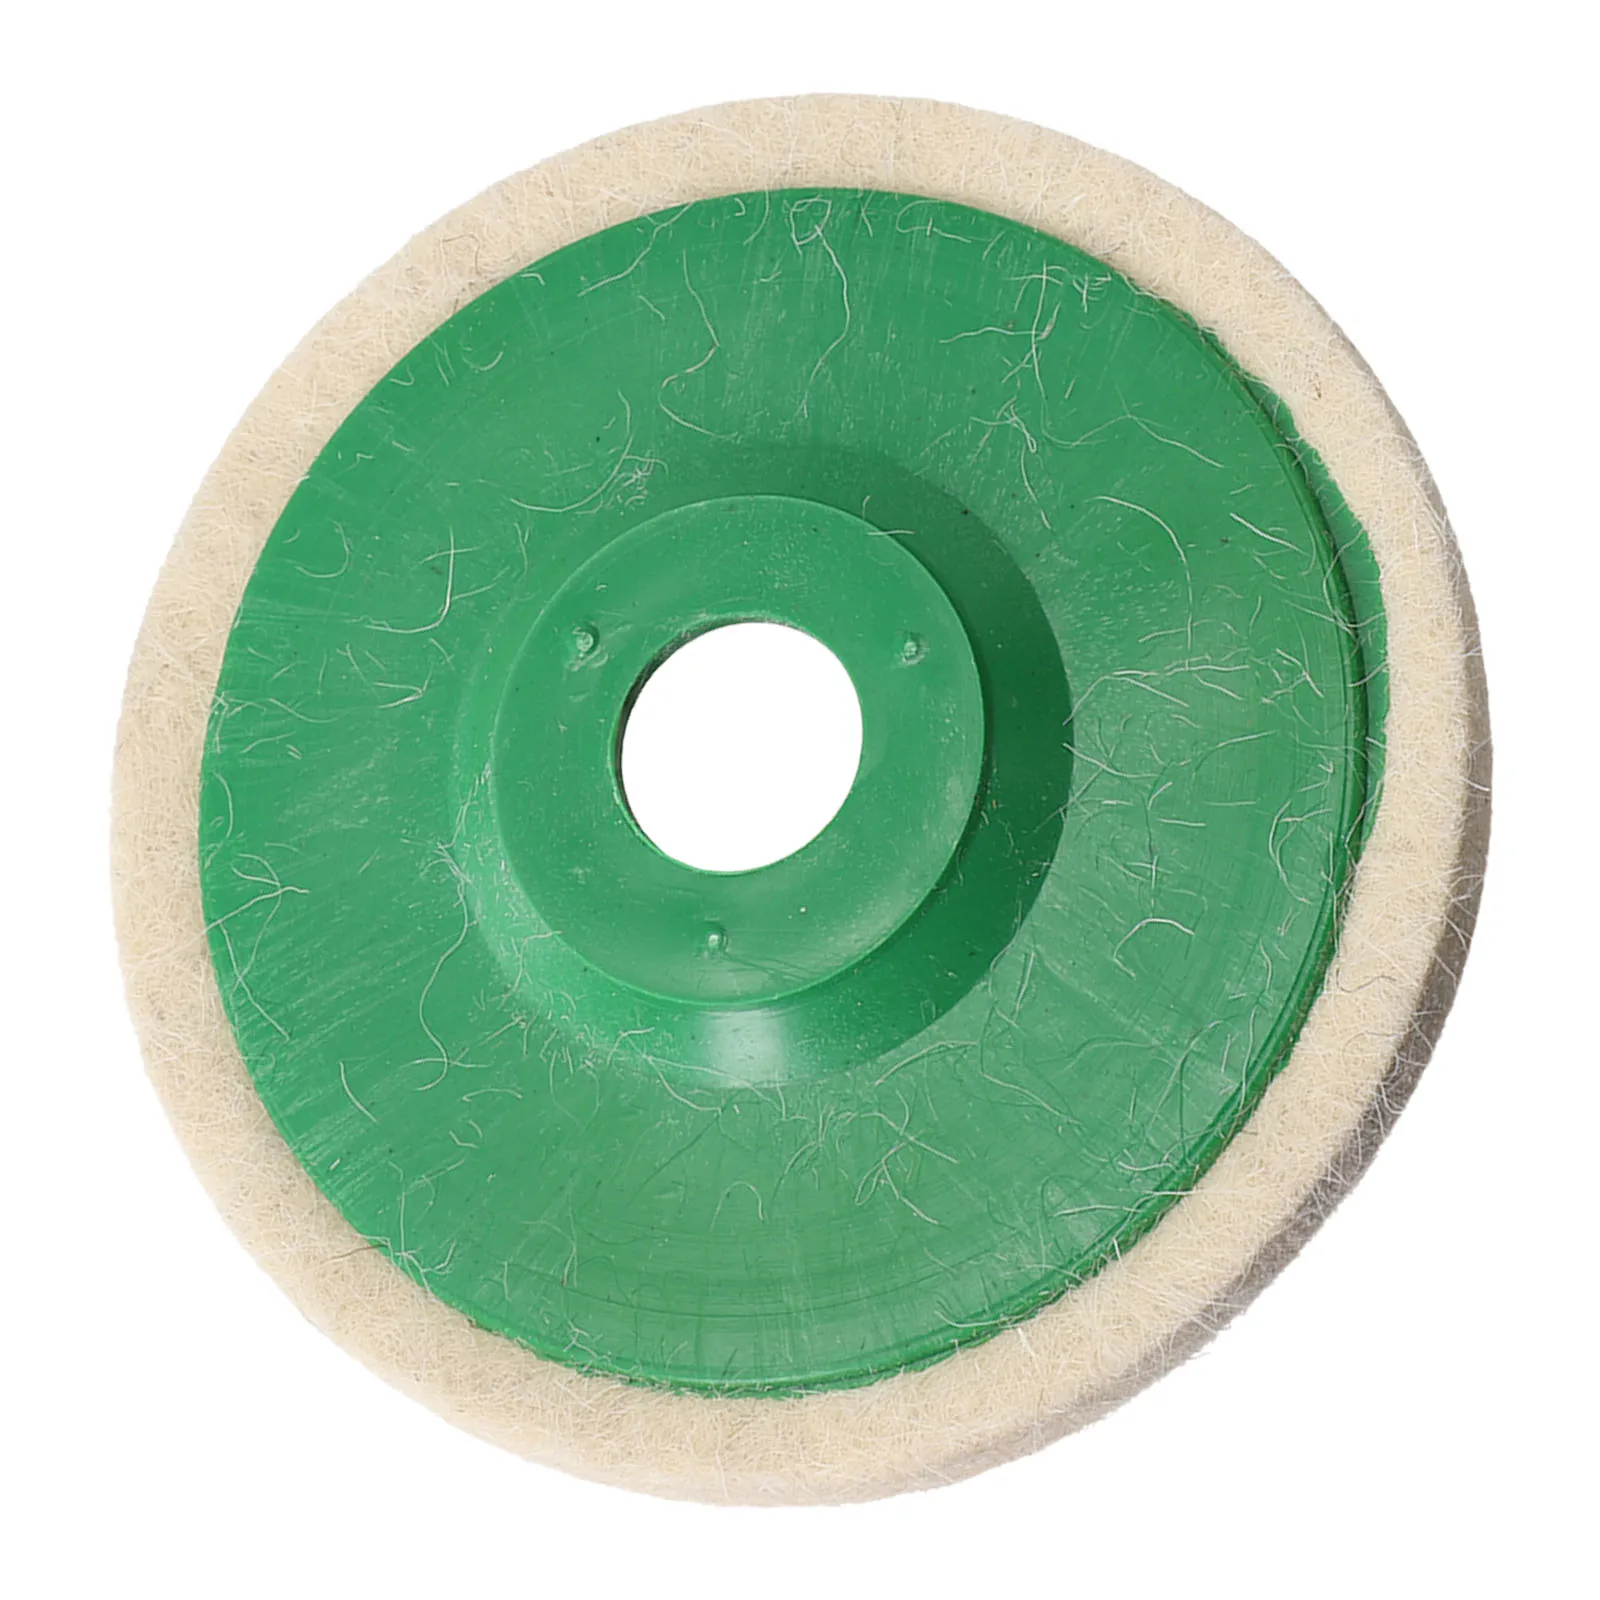 

Tool Polishing Pad High Quality Wool Polishing Pad Wool Felt Disc 5in Buffing Grinding Wheel Abrasive Brand New